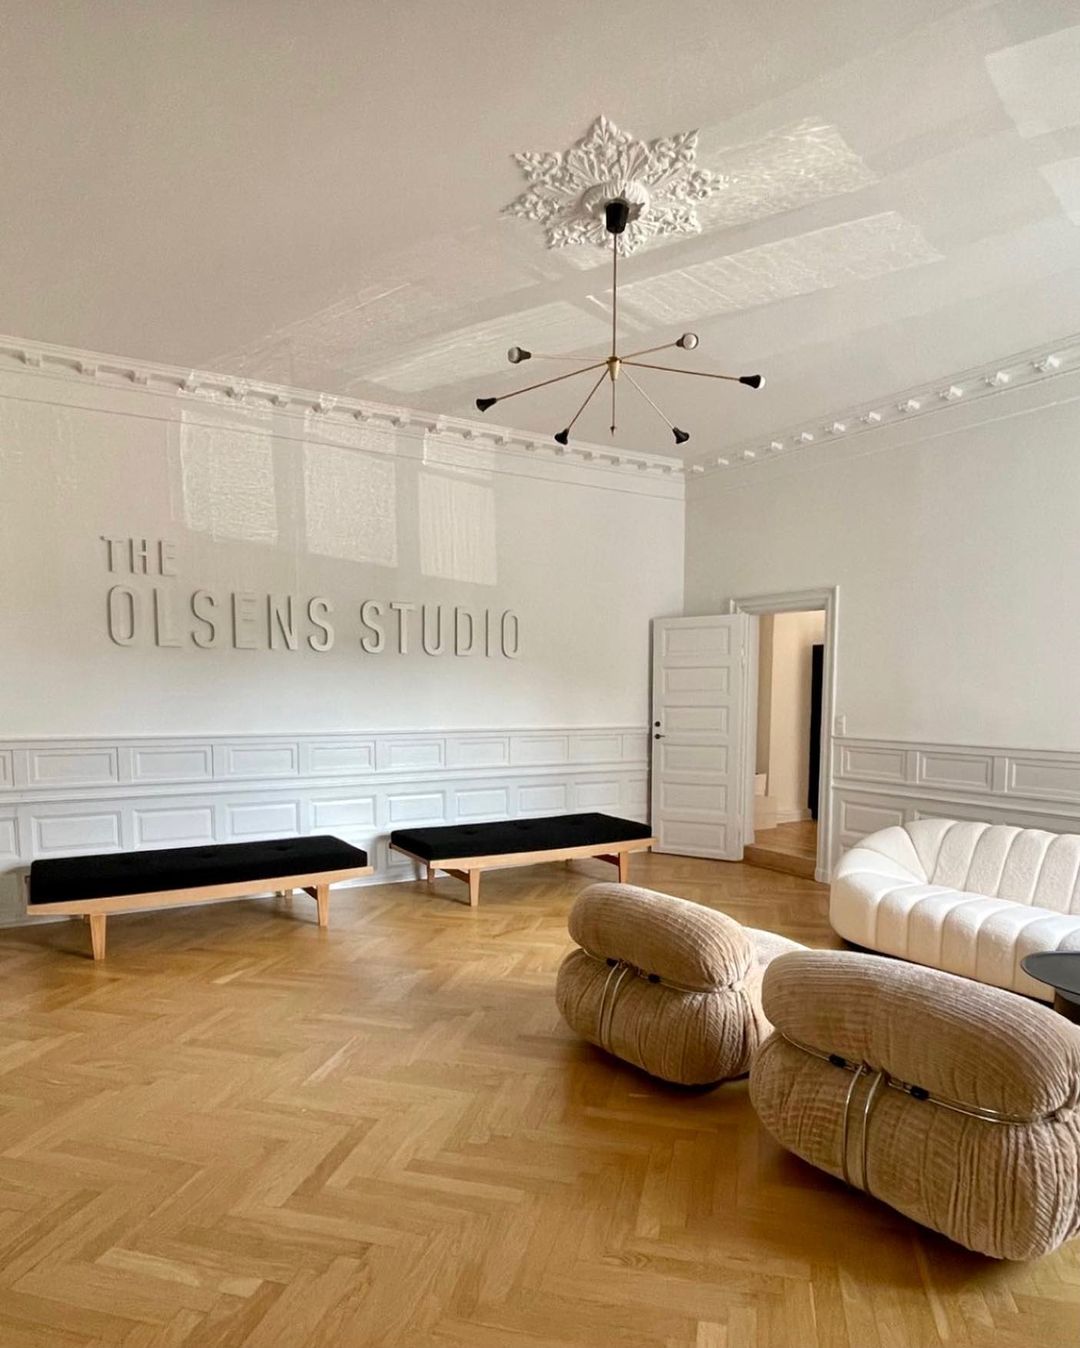 The Olsens Studio